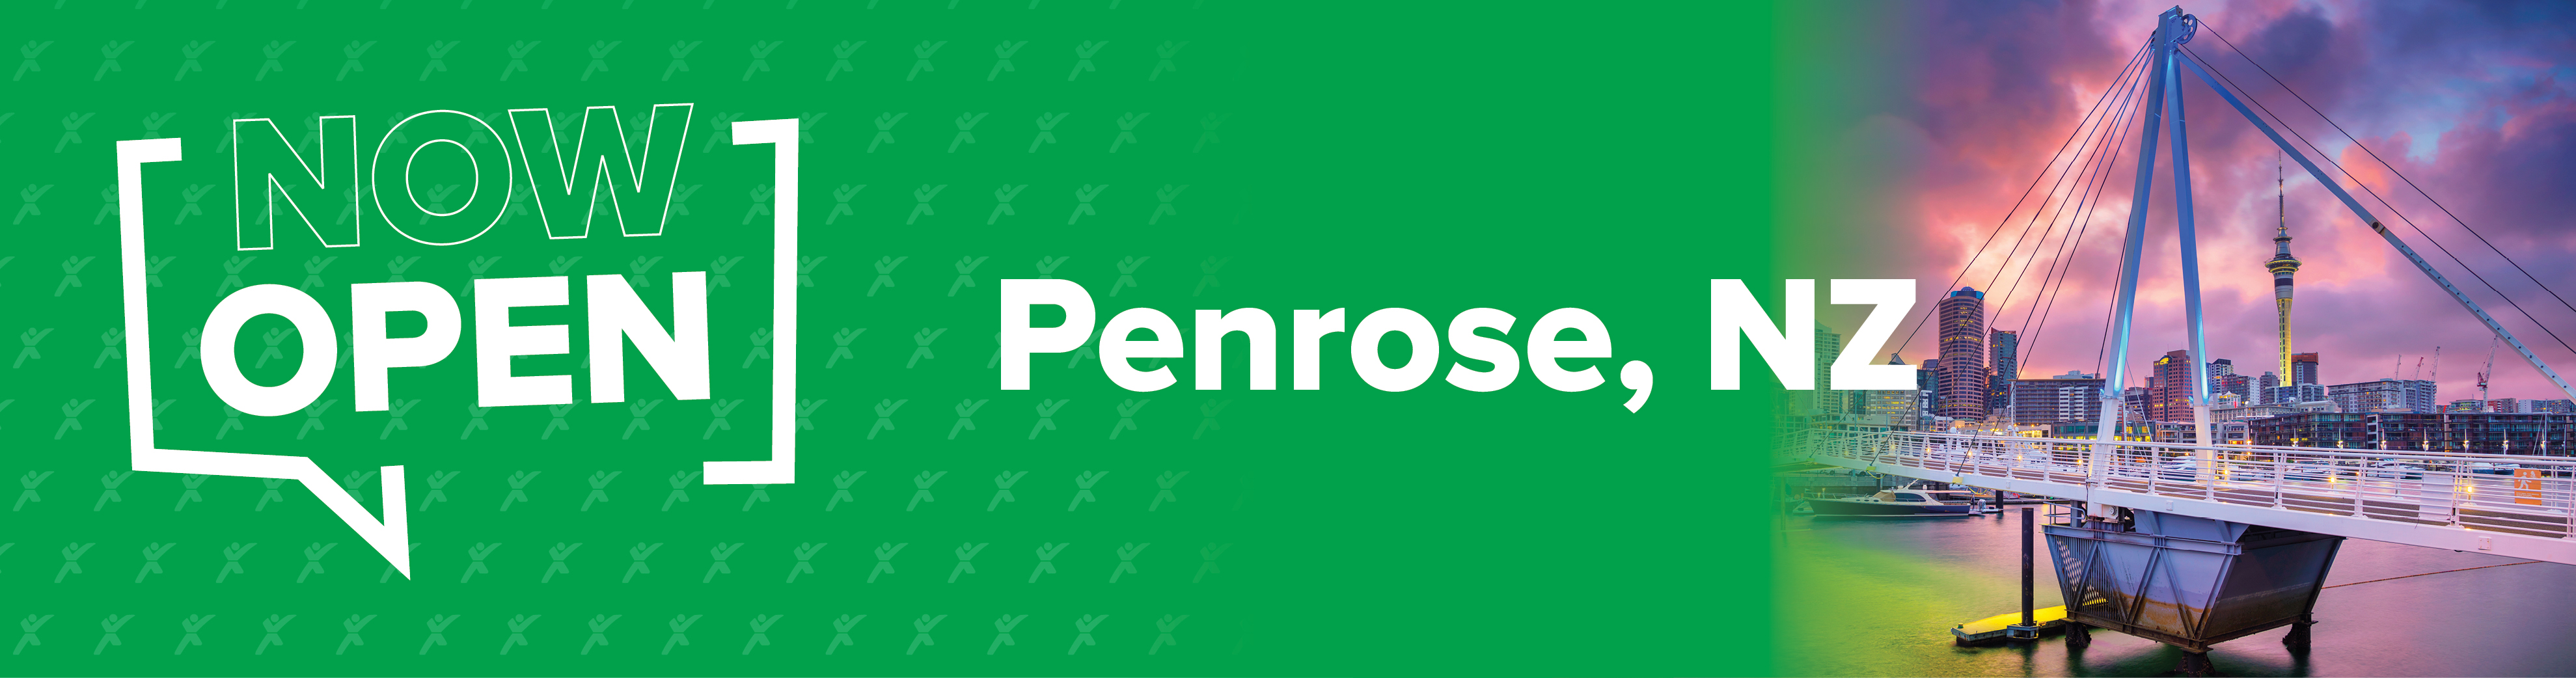 Penrose Open Now